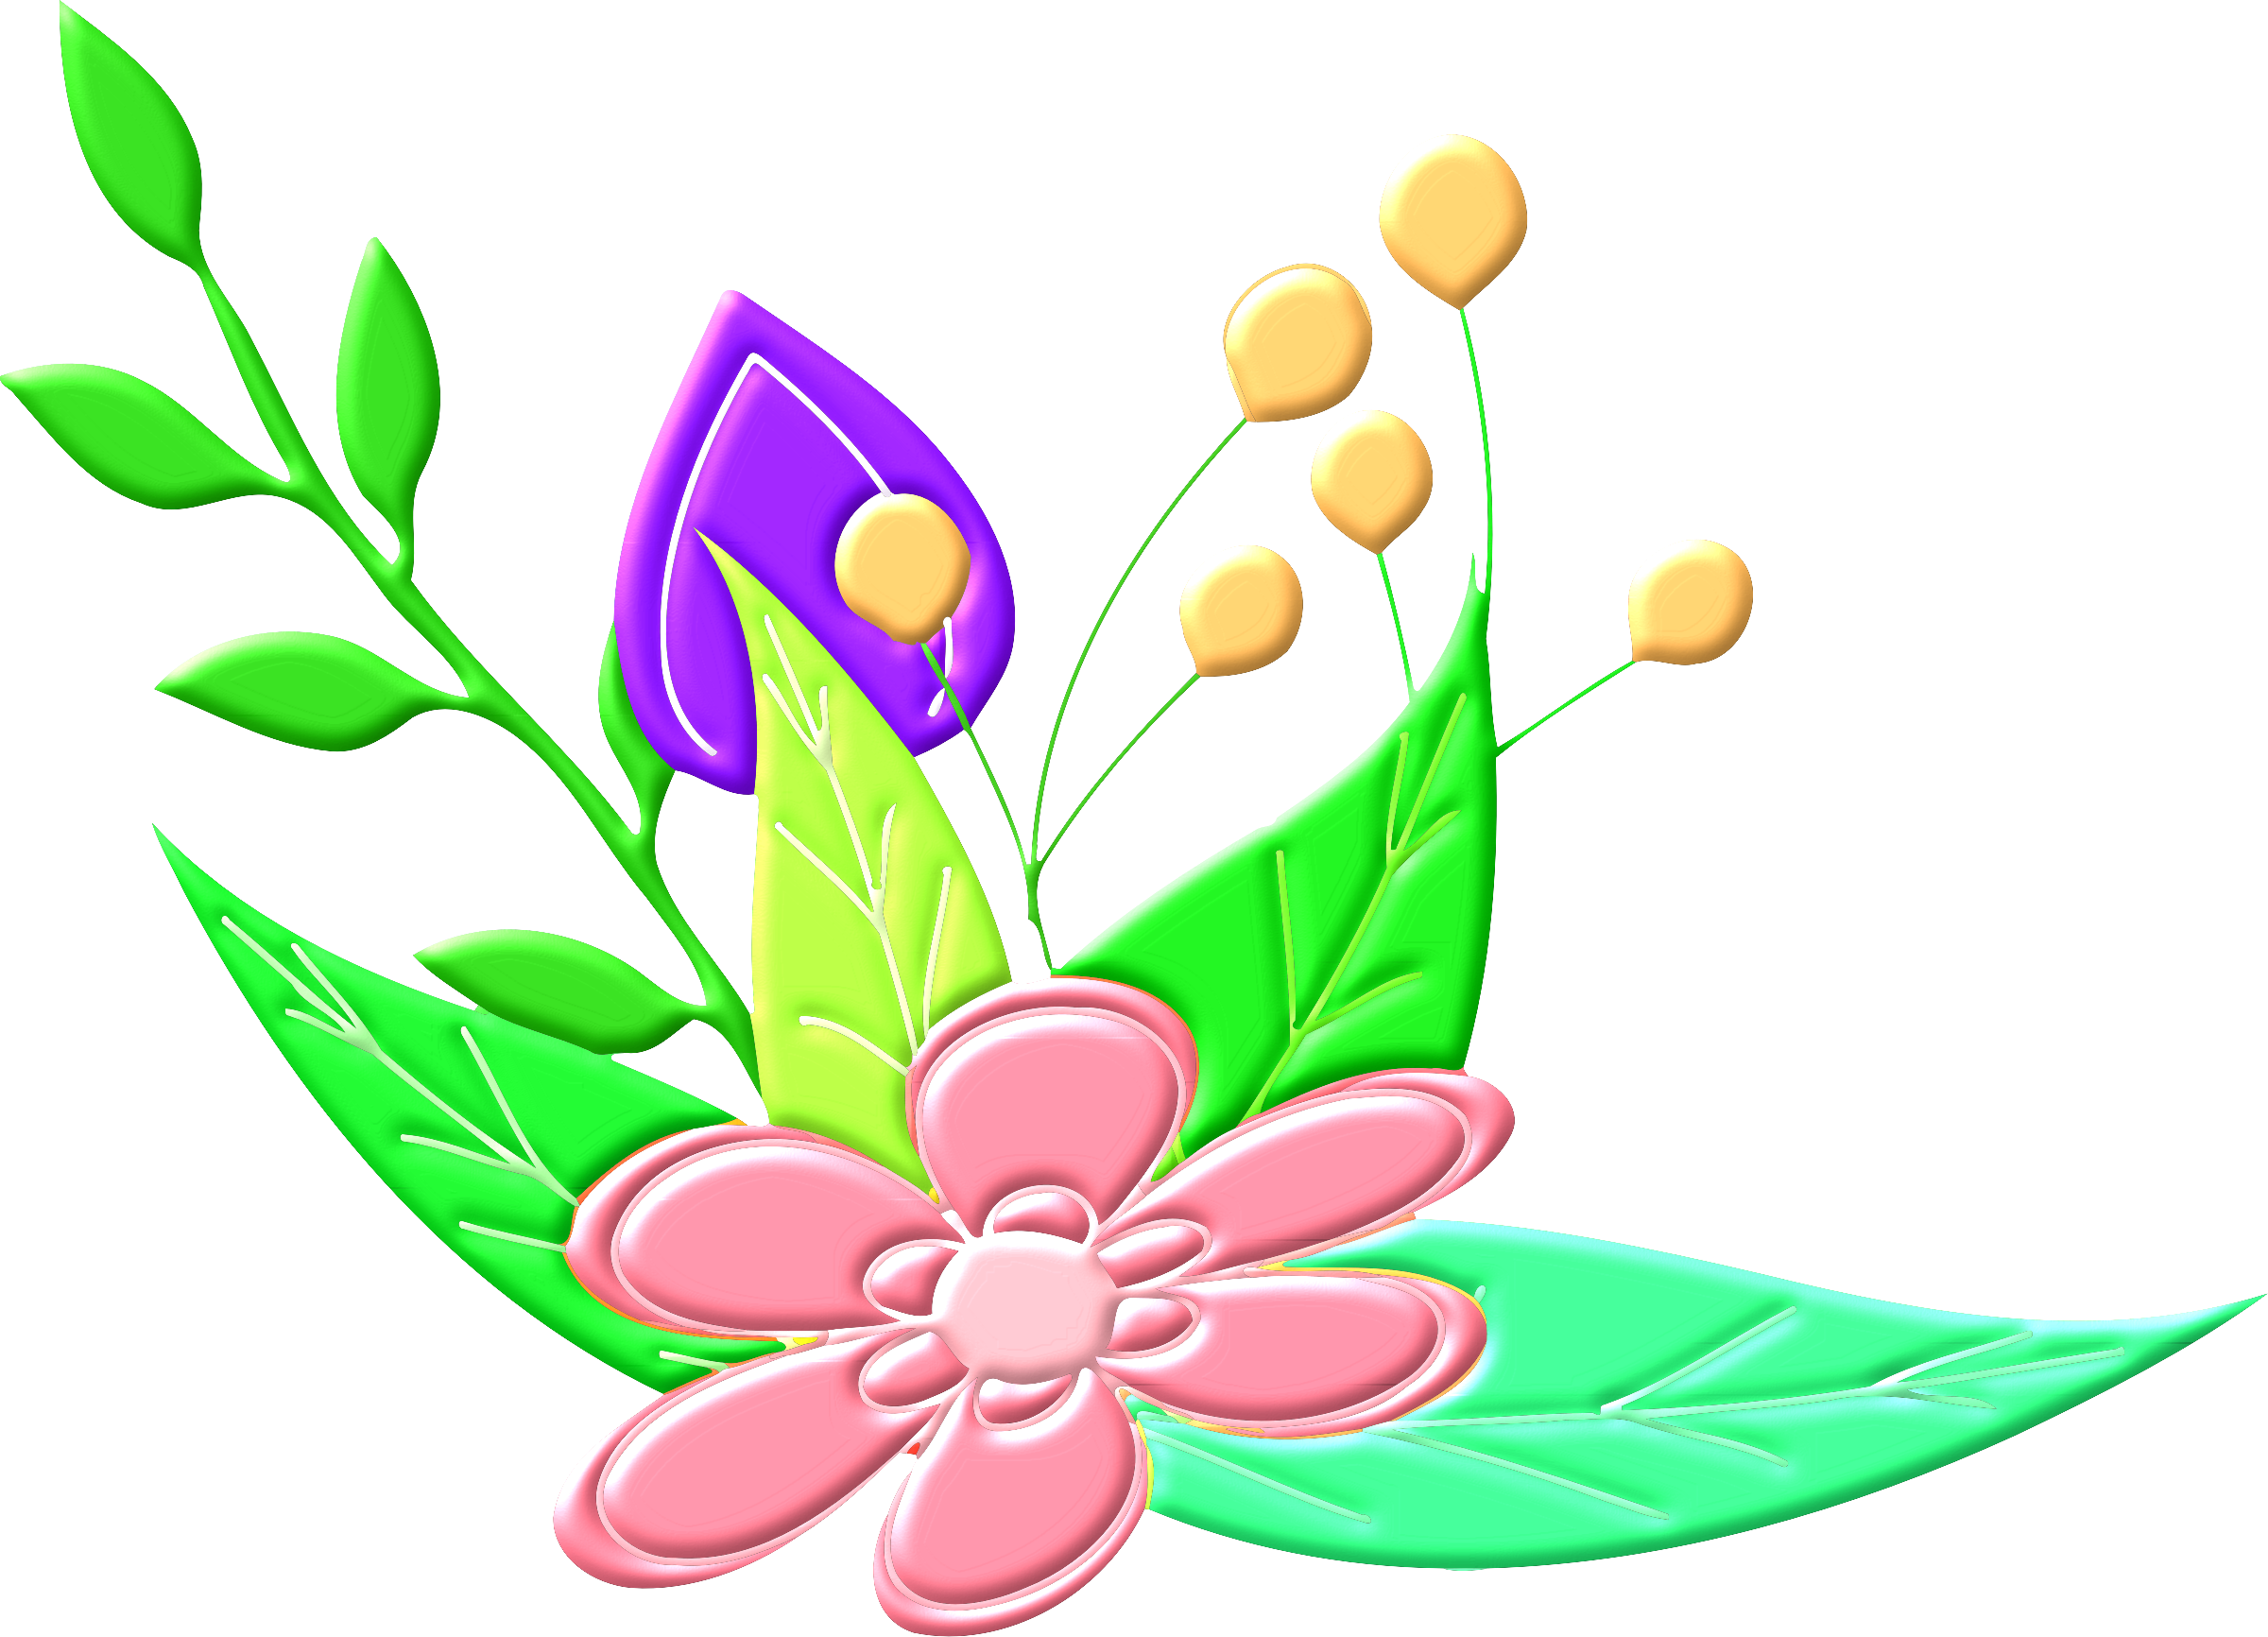 Floral Design Vector Clipart image